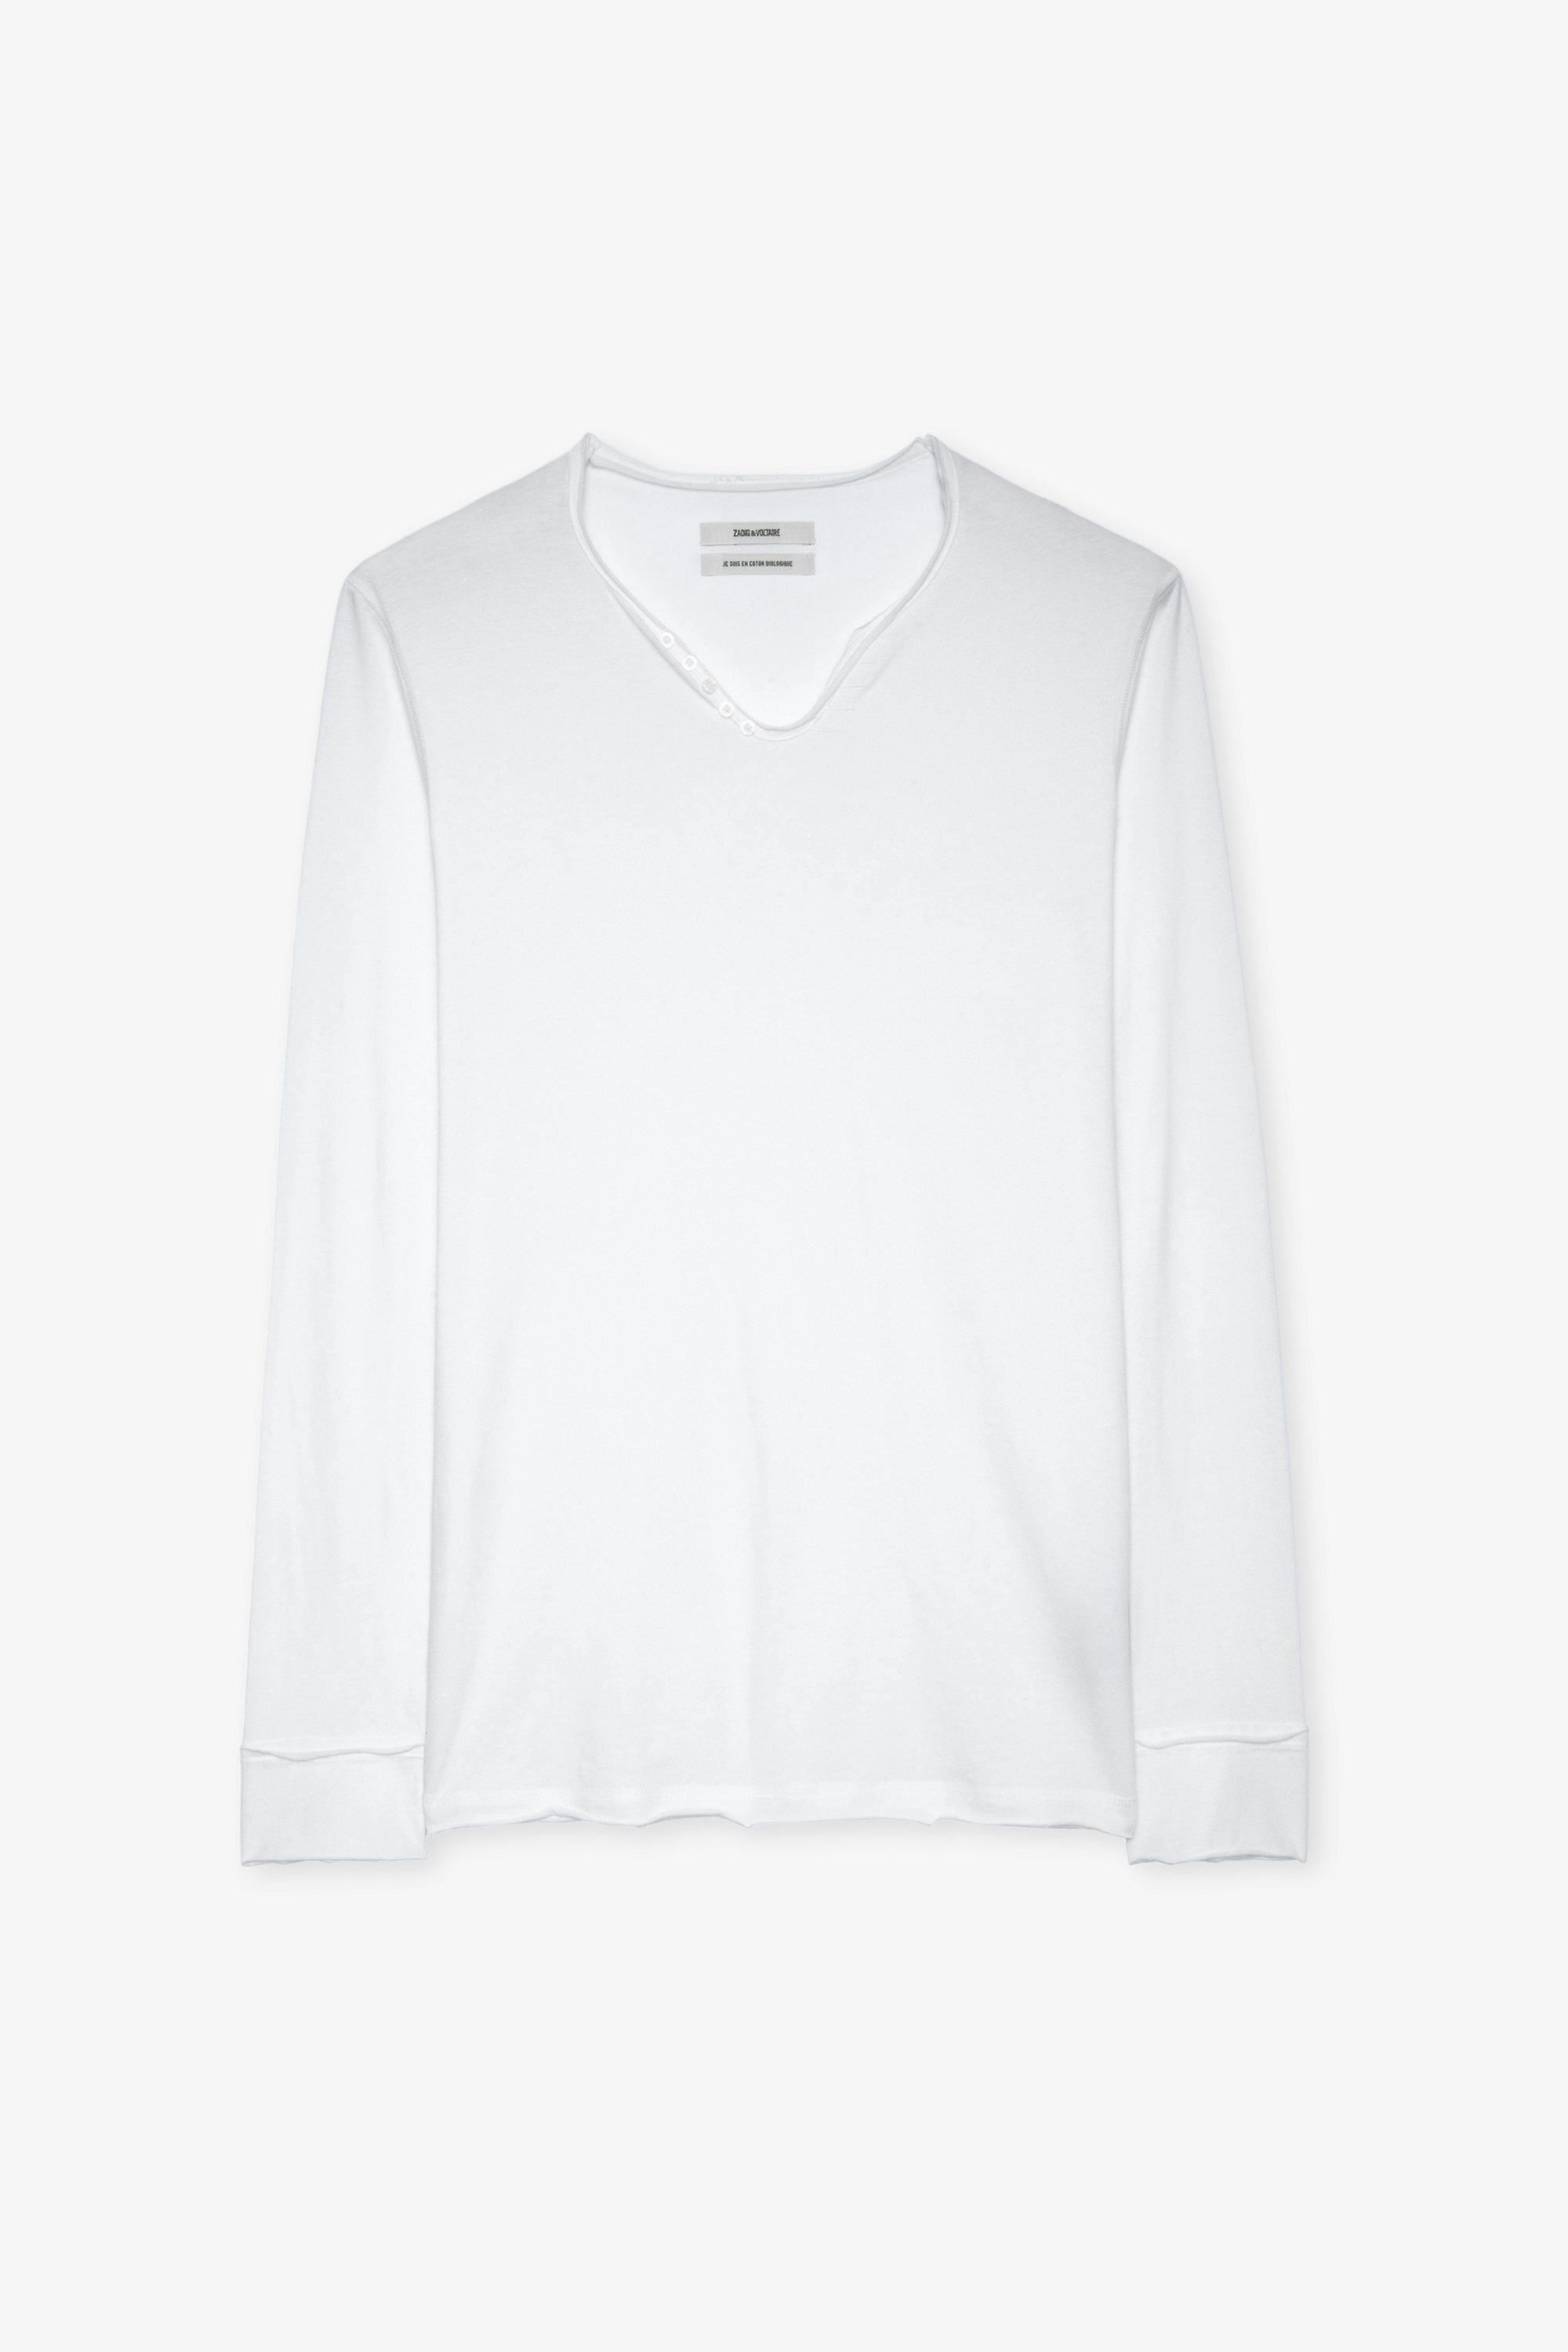 Monastir Ｔシャツ - Men’s white cotton henley T-shirt